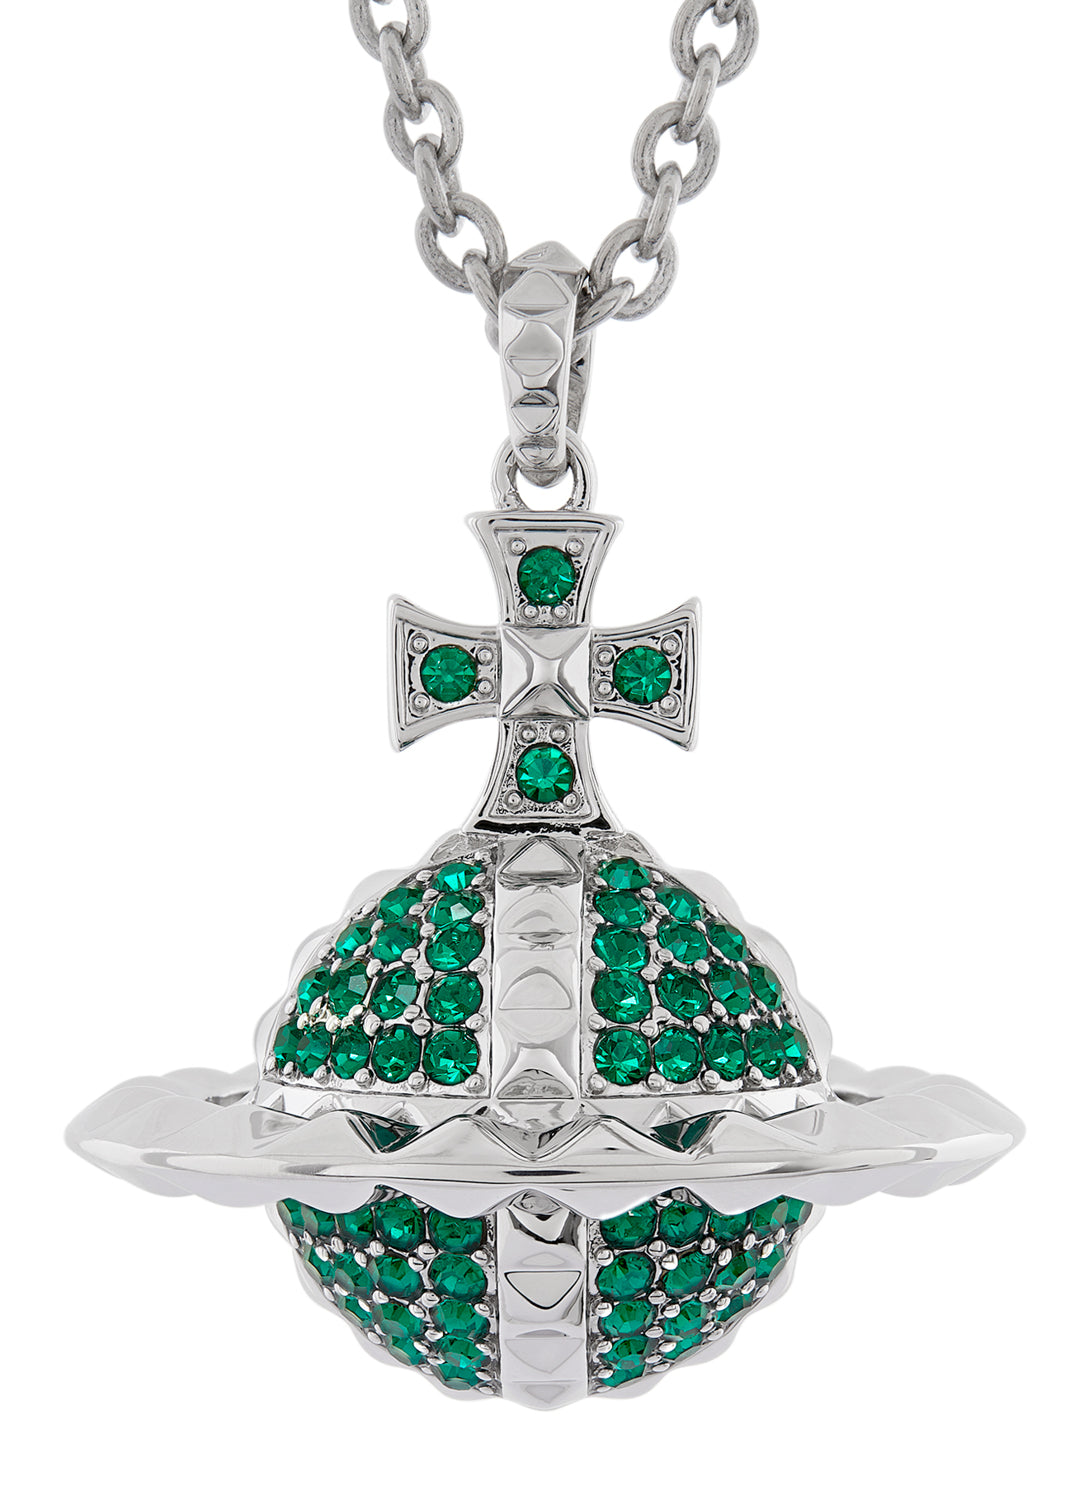 Mayfair Large Orb Pendant - Silver/Emerald Green - 63020050-02W126